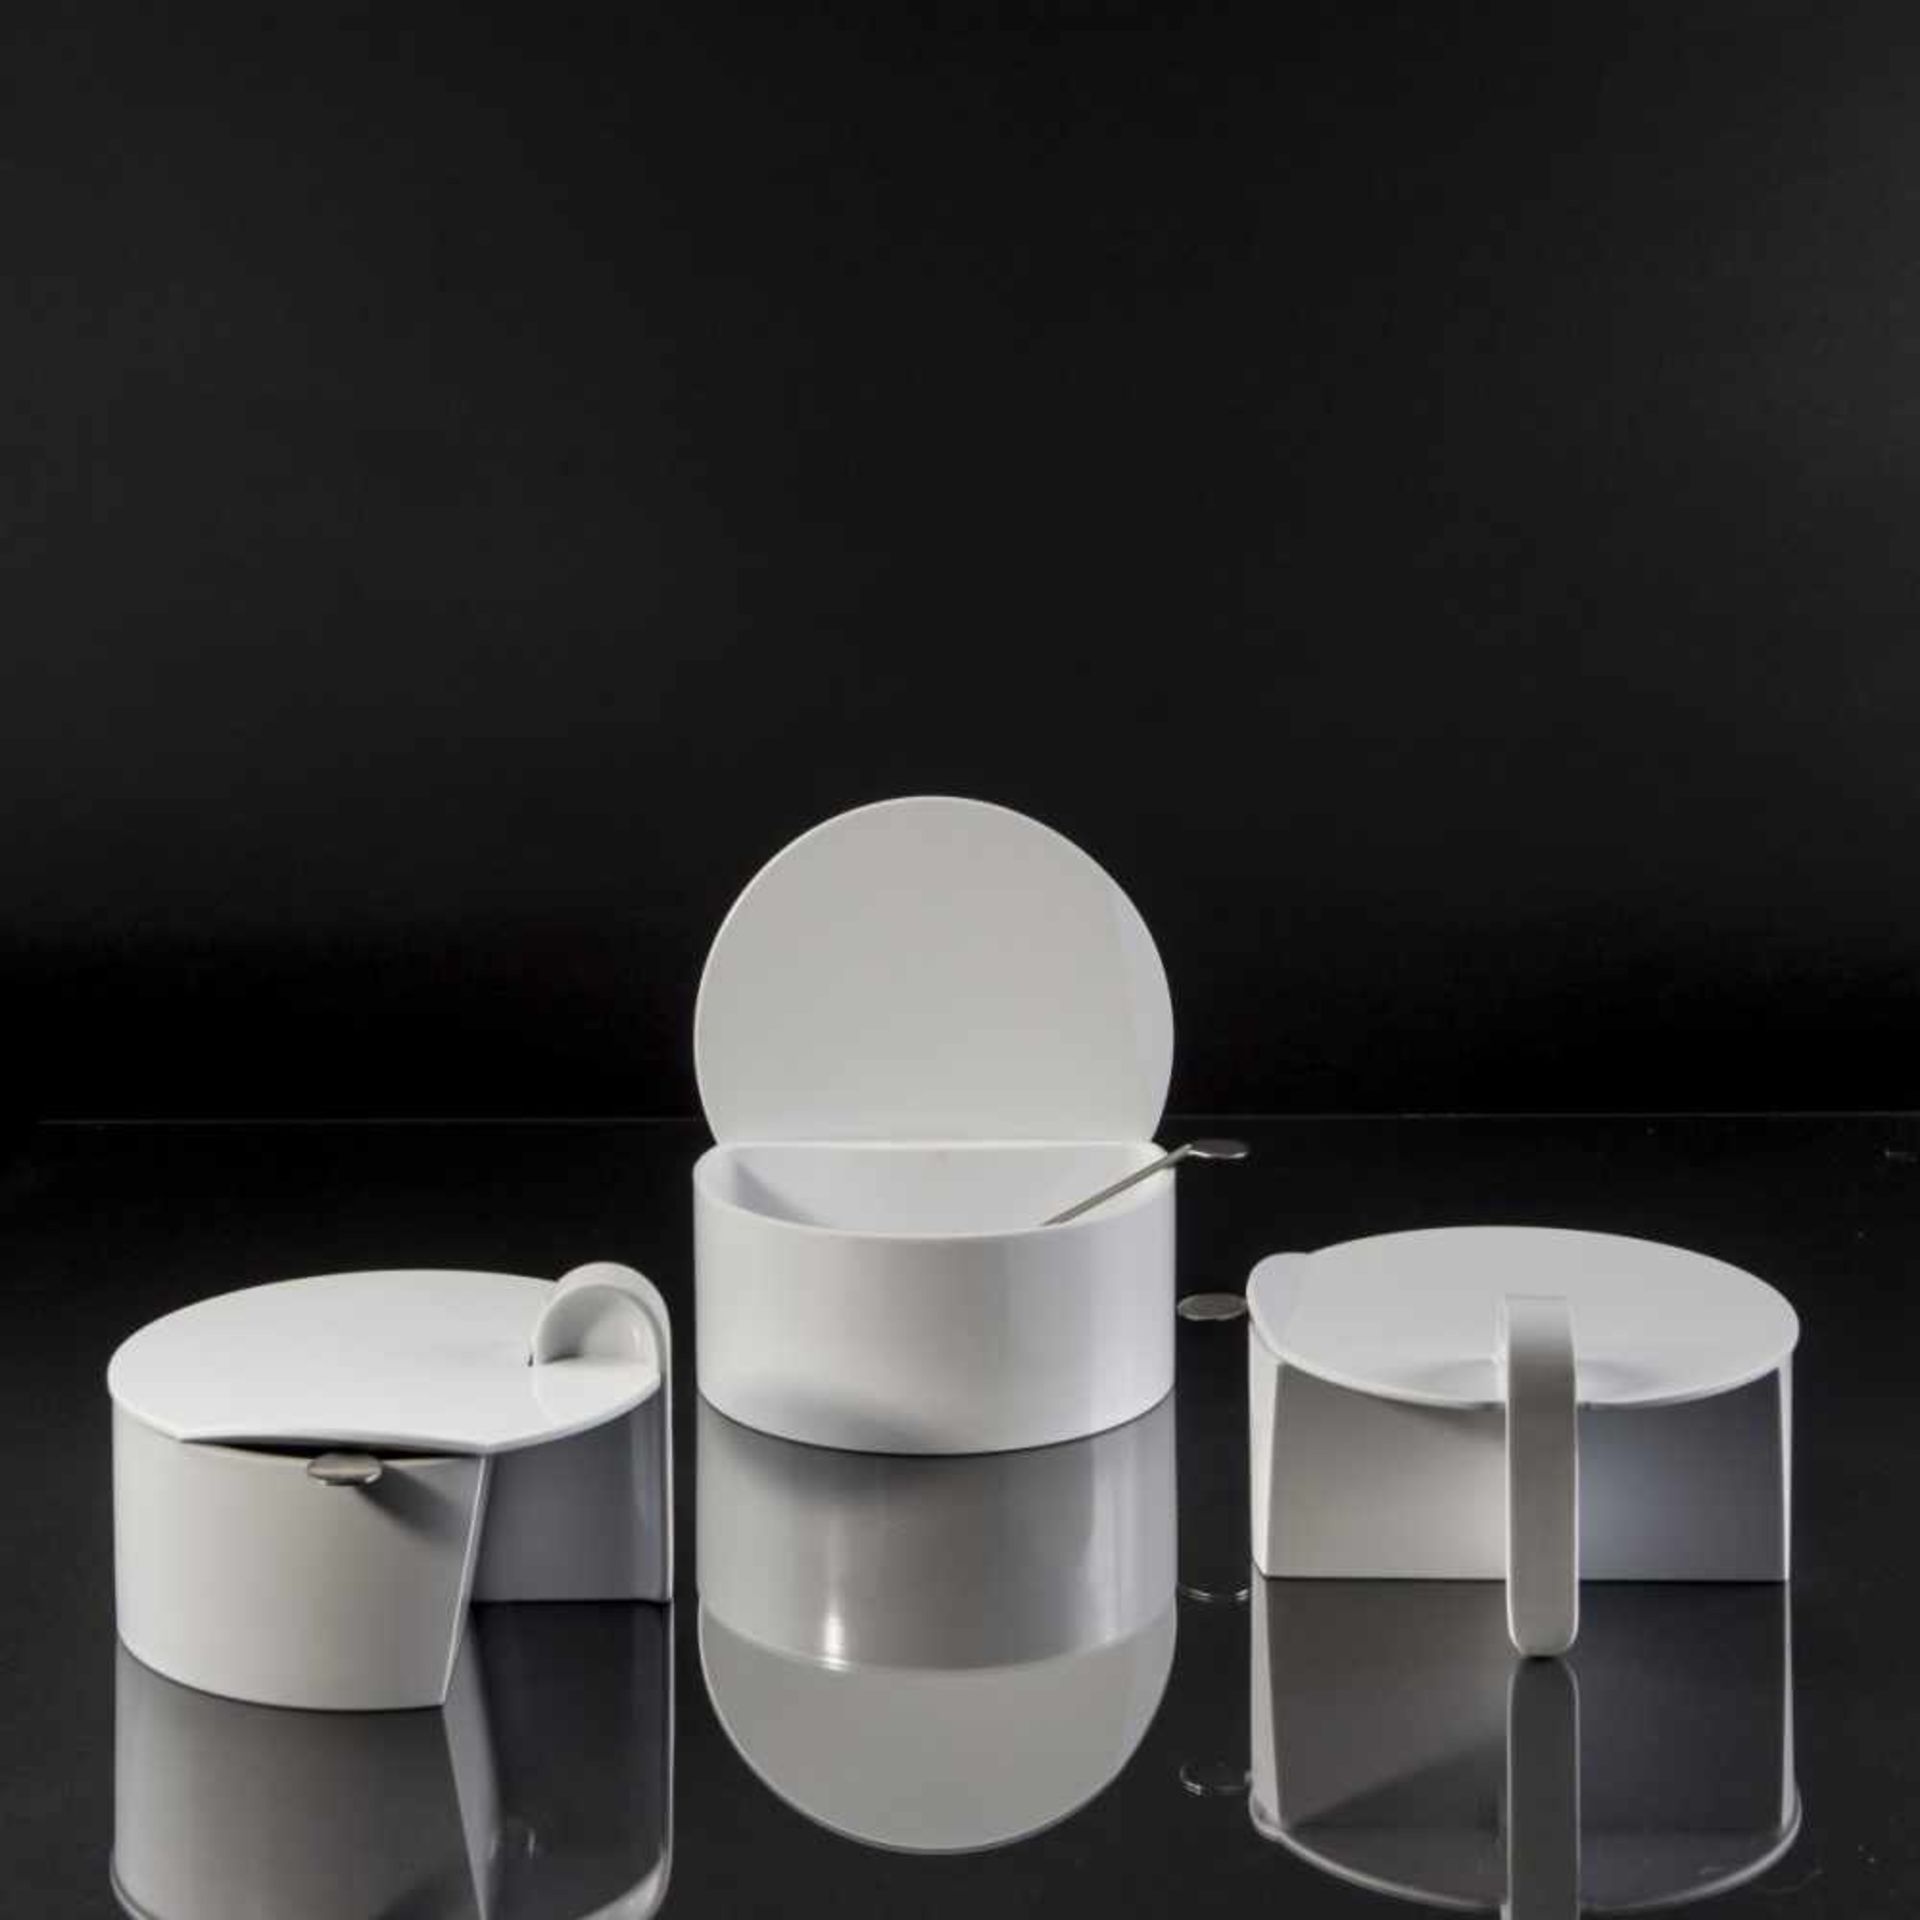 Enzo Mari, Three 'Java' containers, 1969/70Enzo Mari, Three 'Java' containers, 1969/70, H. 8.4 cm,